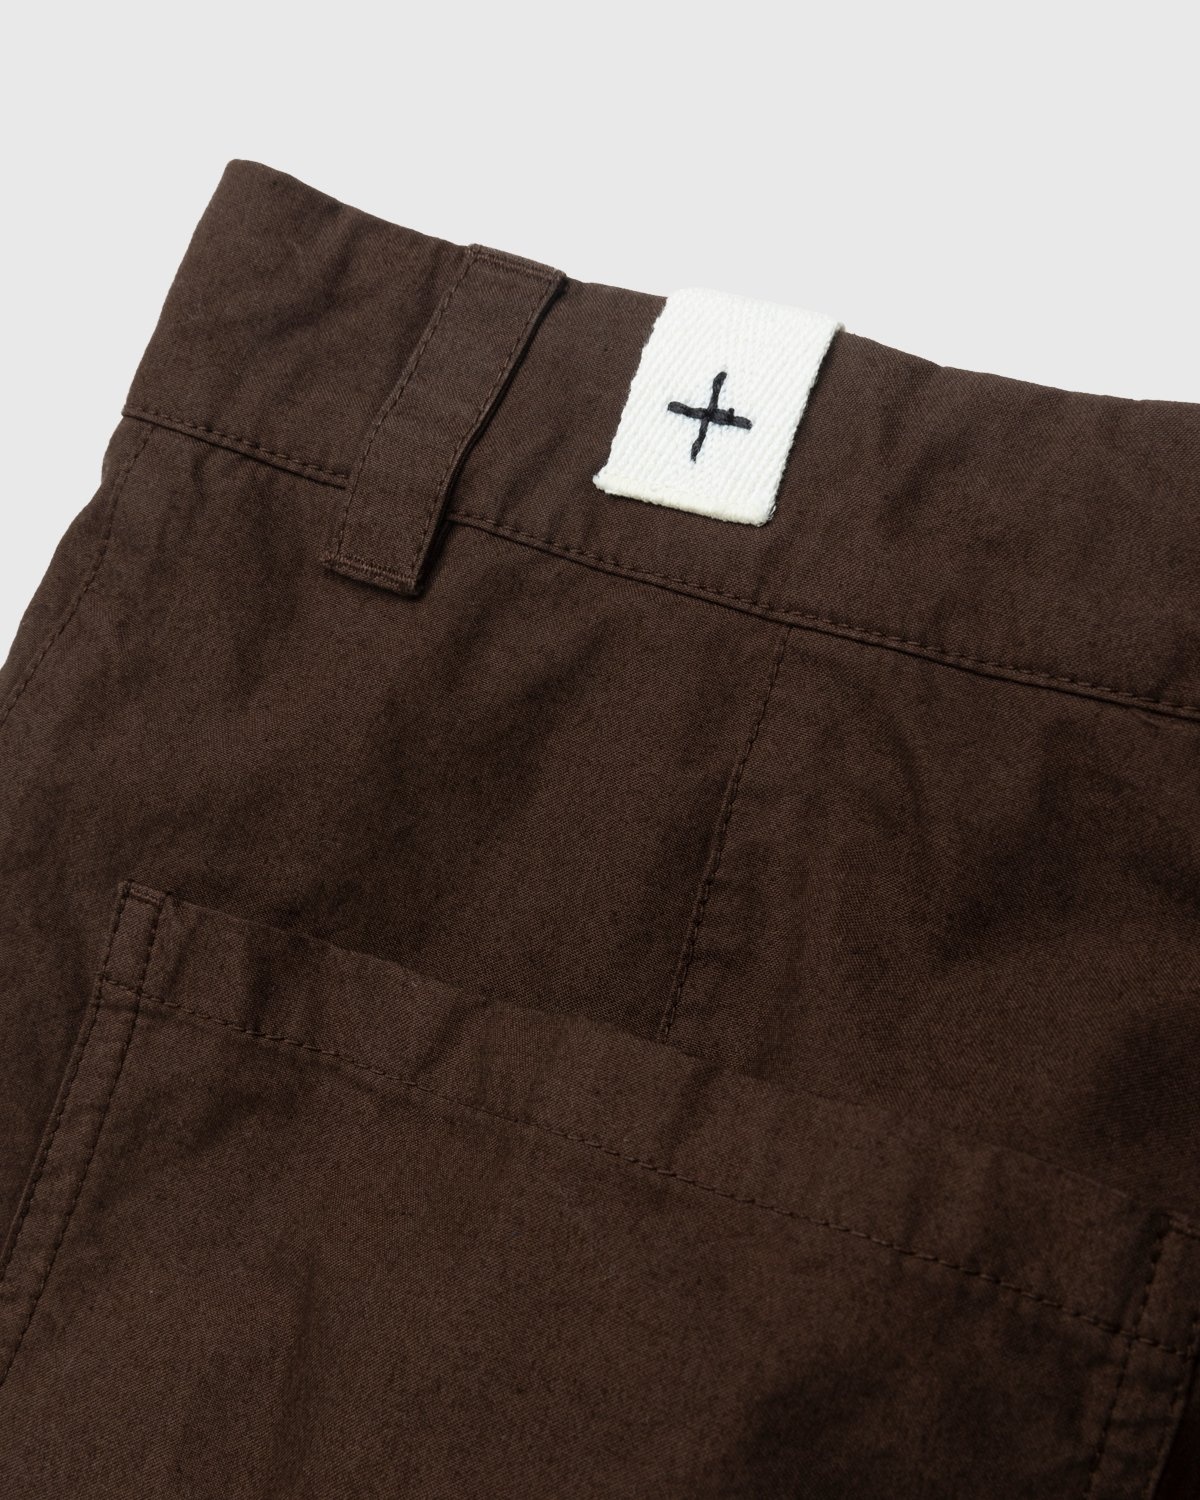 Jil Sander – Cotton Trousers Dark Brown - Pants - Brown - Image 5